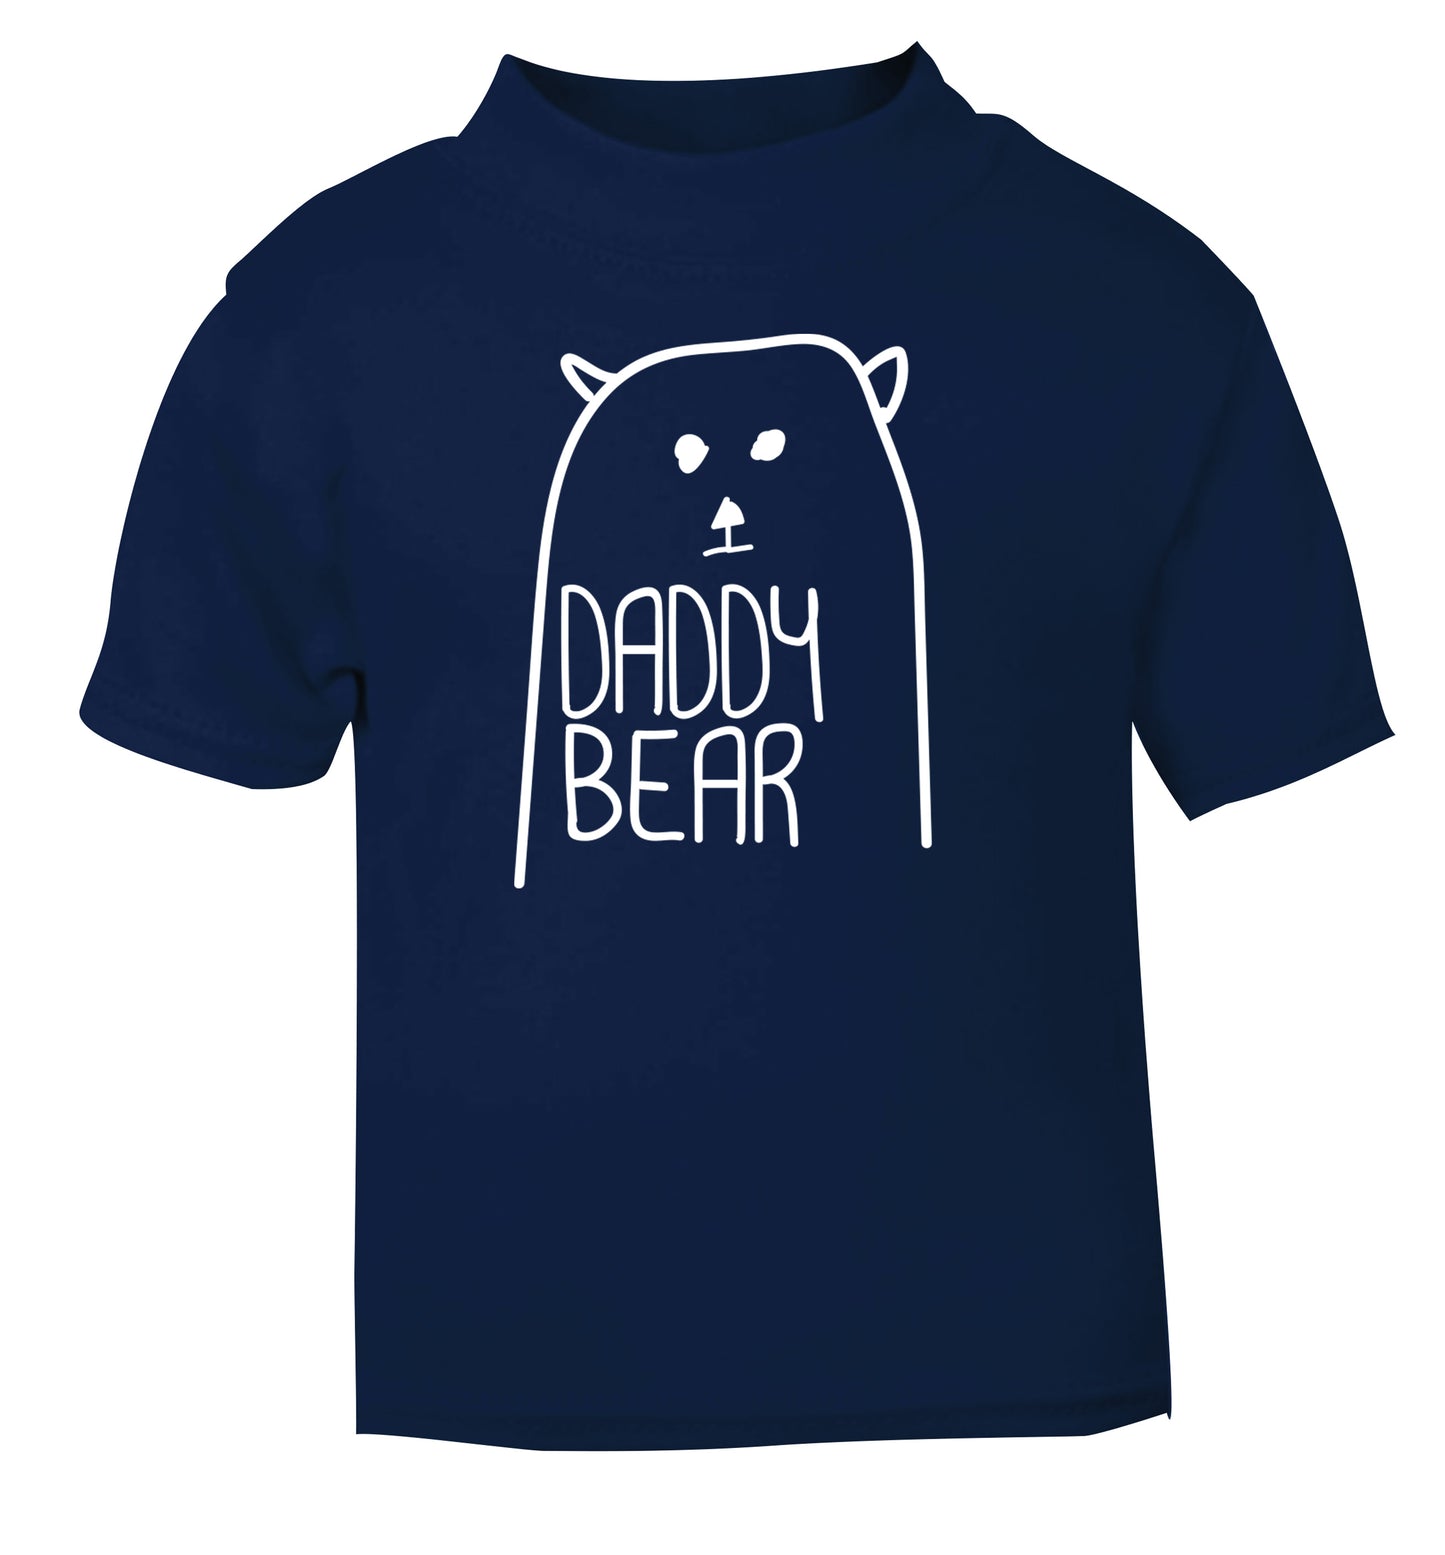 Daddy bear navy Baby Toddler Tshirt 2 Years